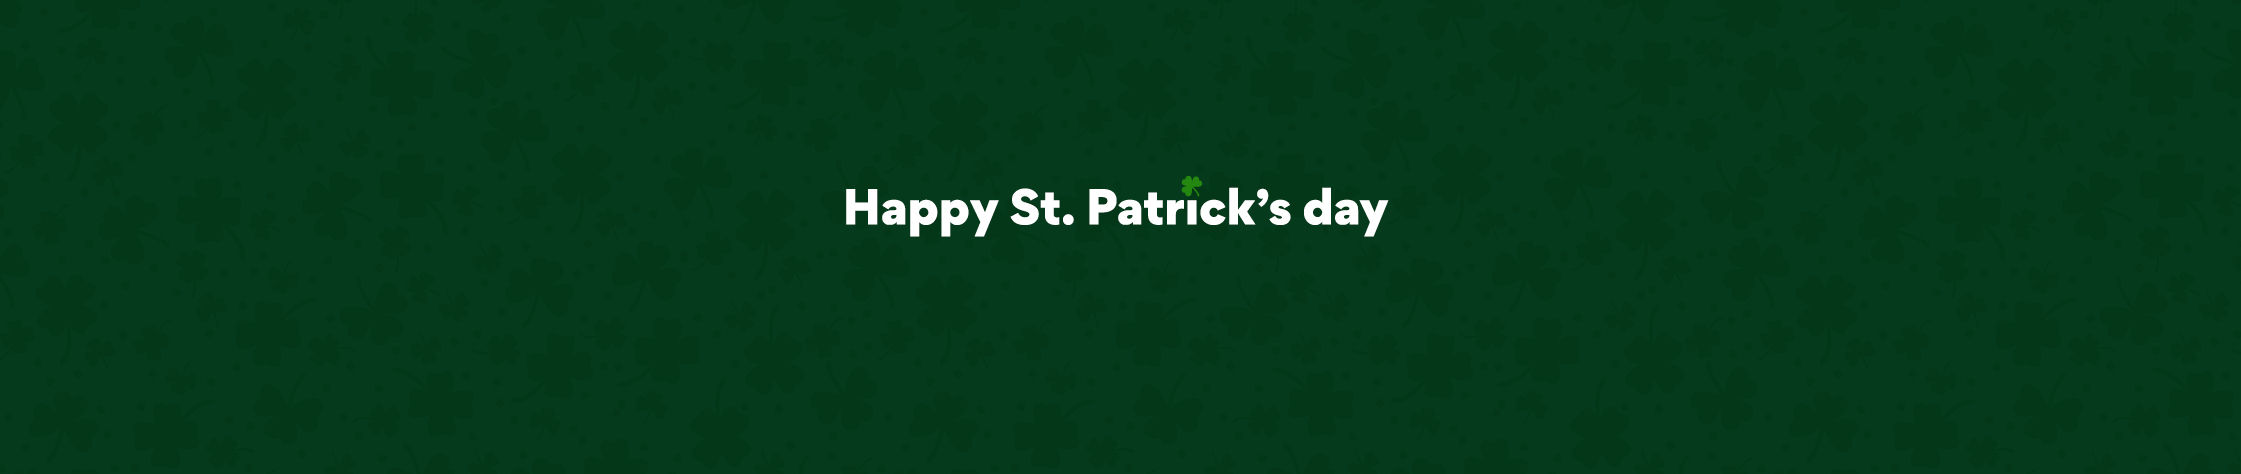 Happy_St_Patricks_Day6.jpg